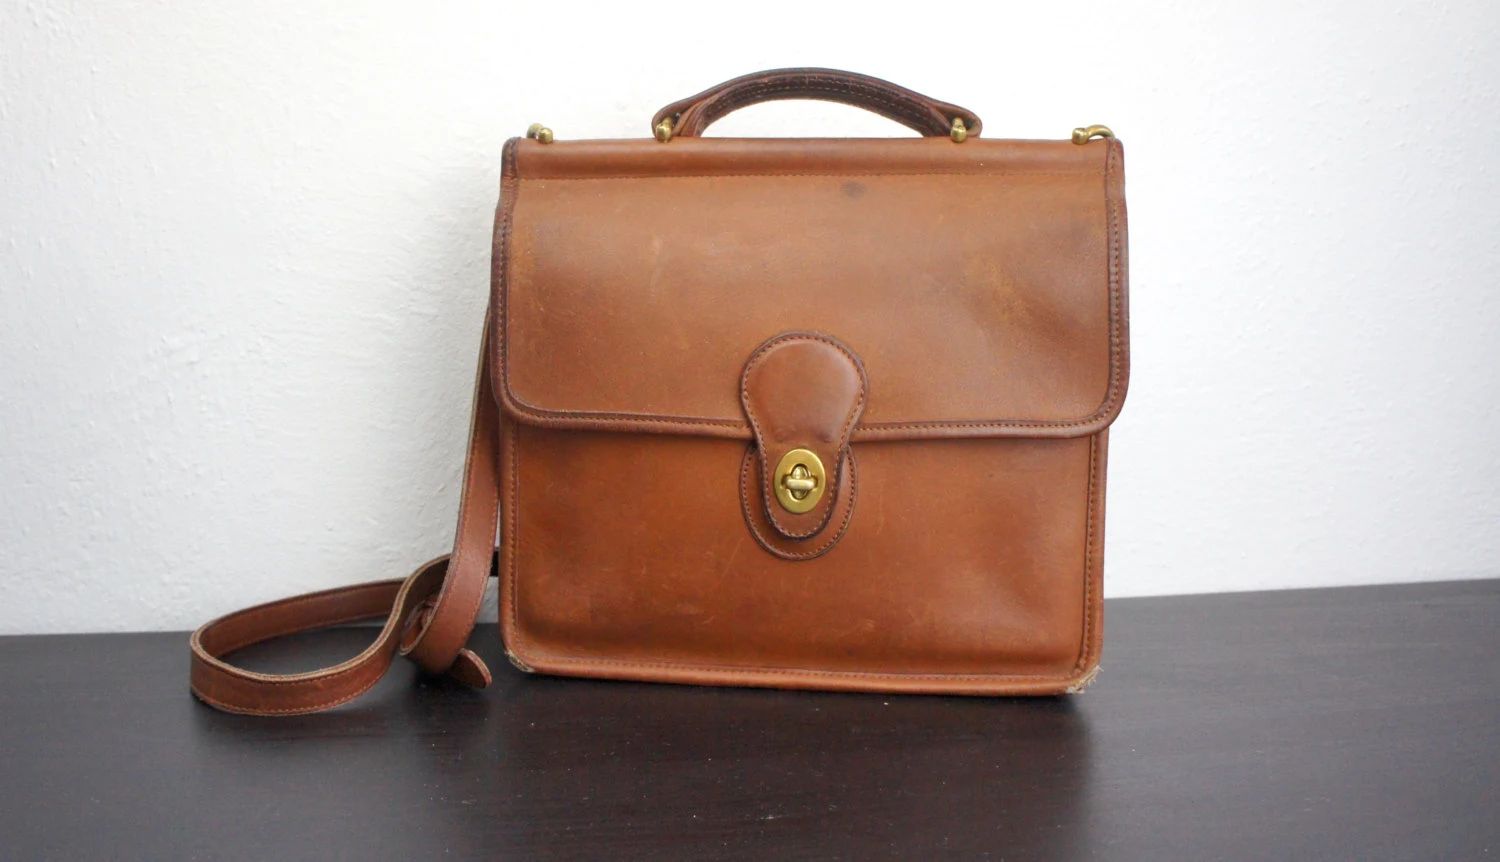 Vintage Coach Willis Bag, British Tan Leather, Satchel Purse, Briefcase Style, Top Handle Long Adjustable Strap, 1990s United States 040421 | Etsy (US)